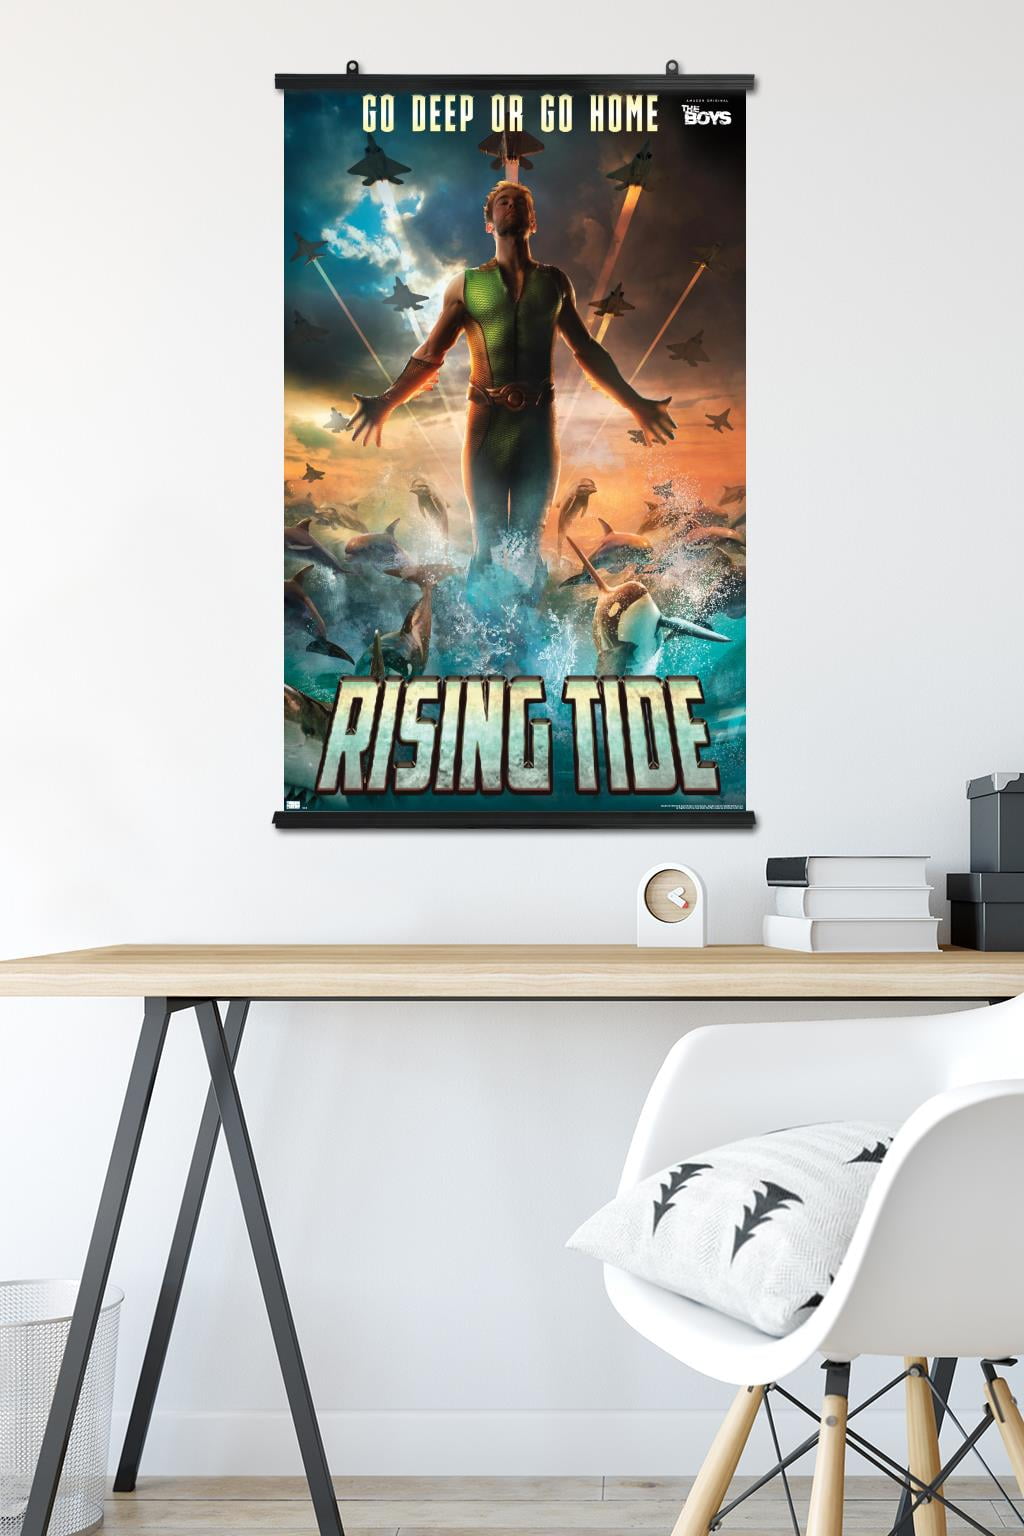 Home - A Rising Tide